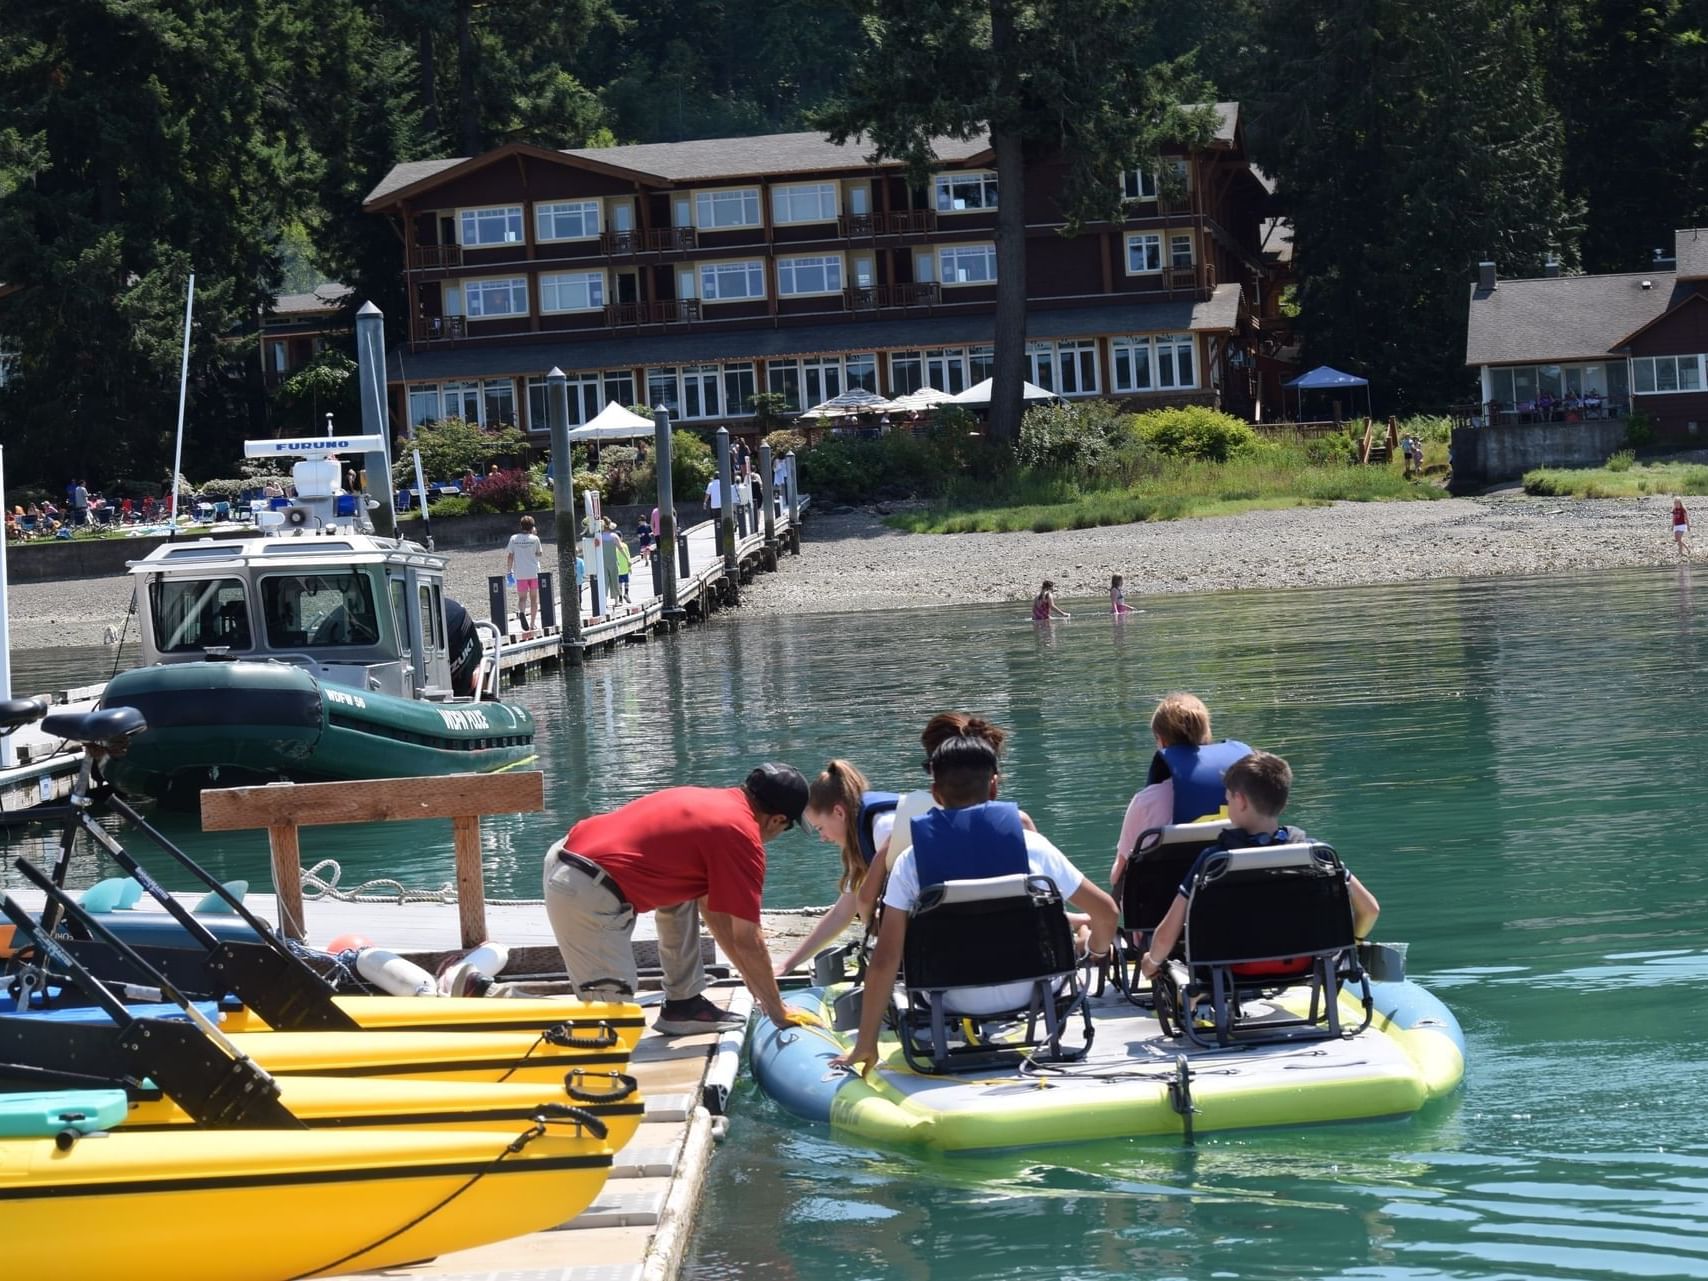 Family enjoying a boat ride on the lake near Alderbrook Resort & Spa